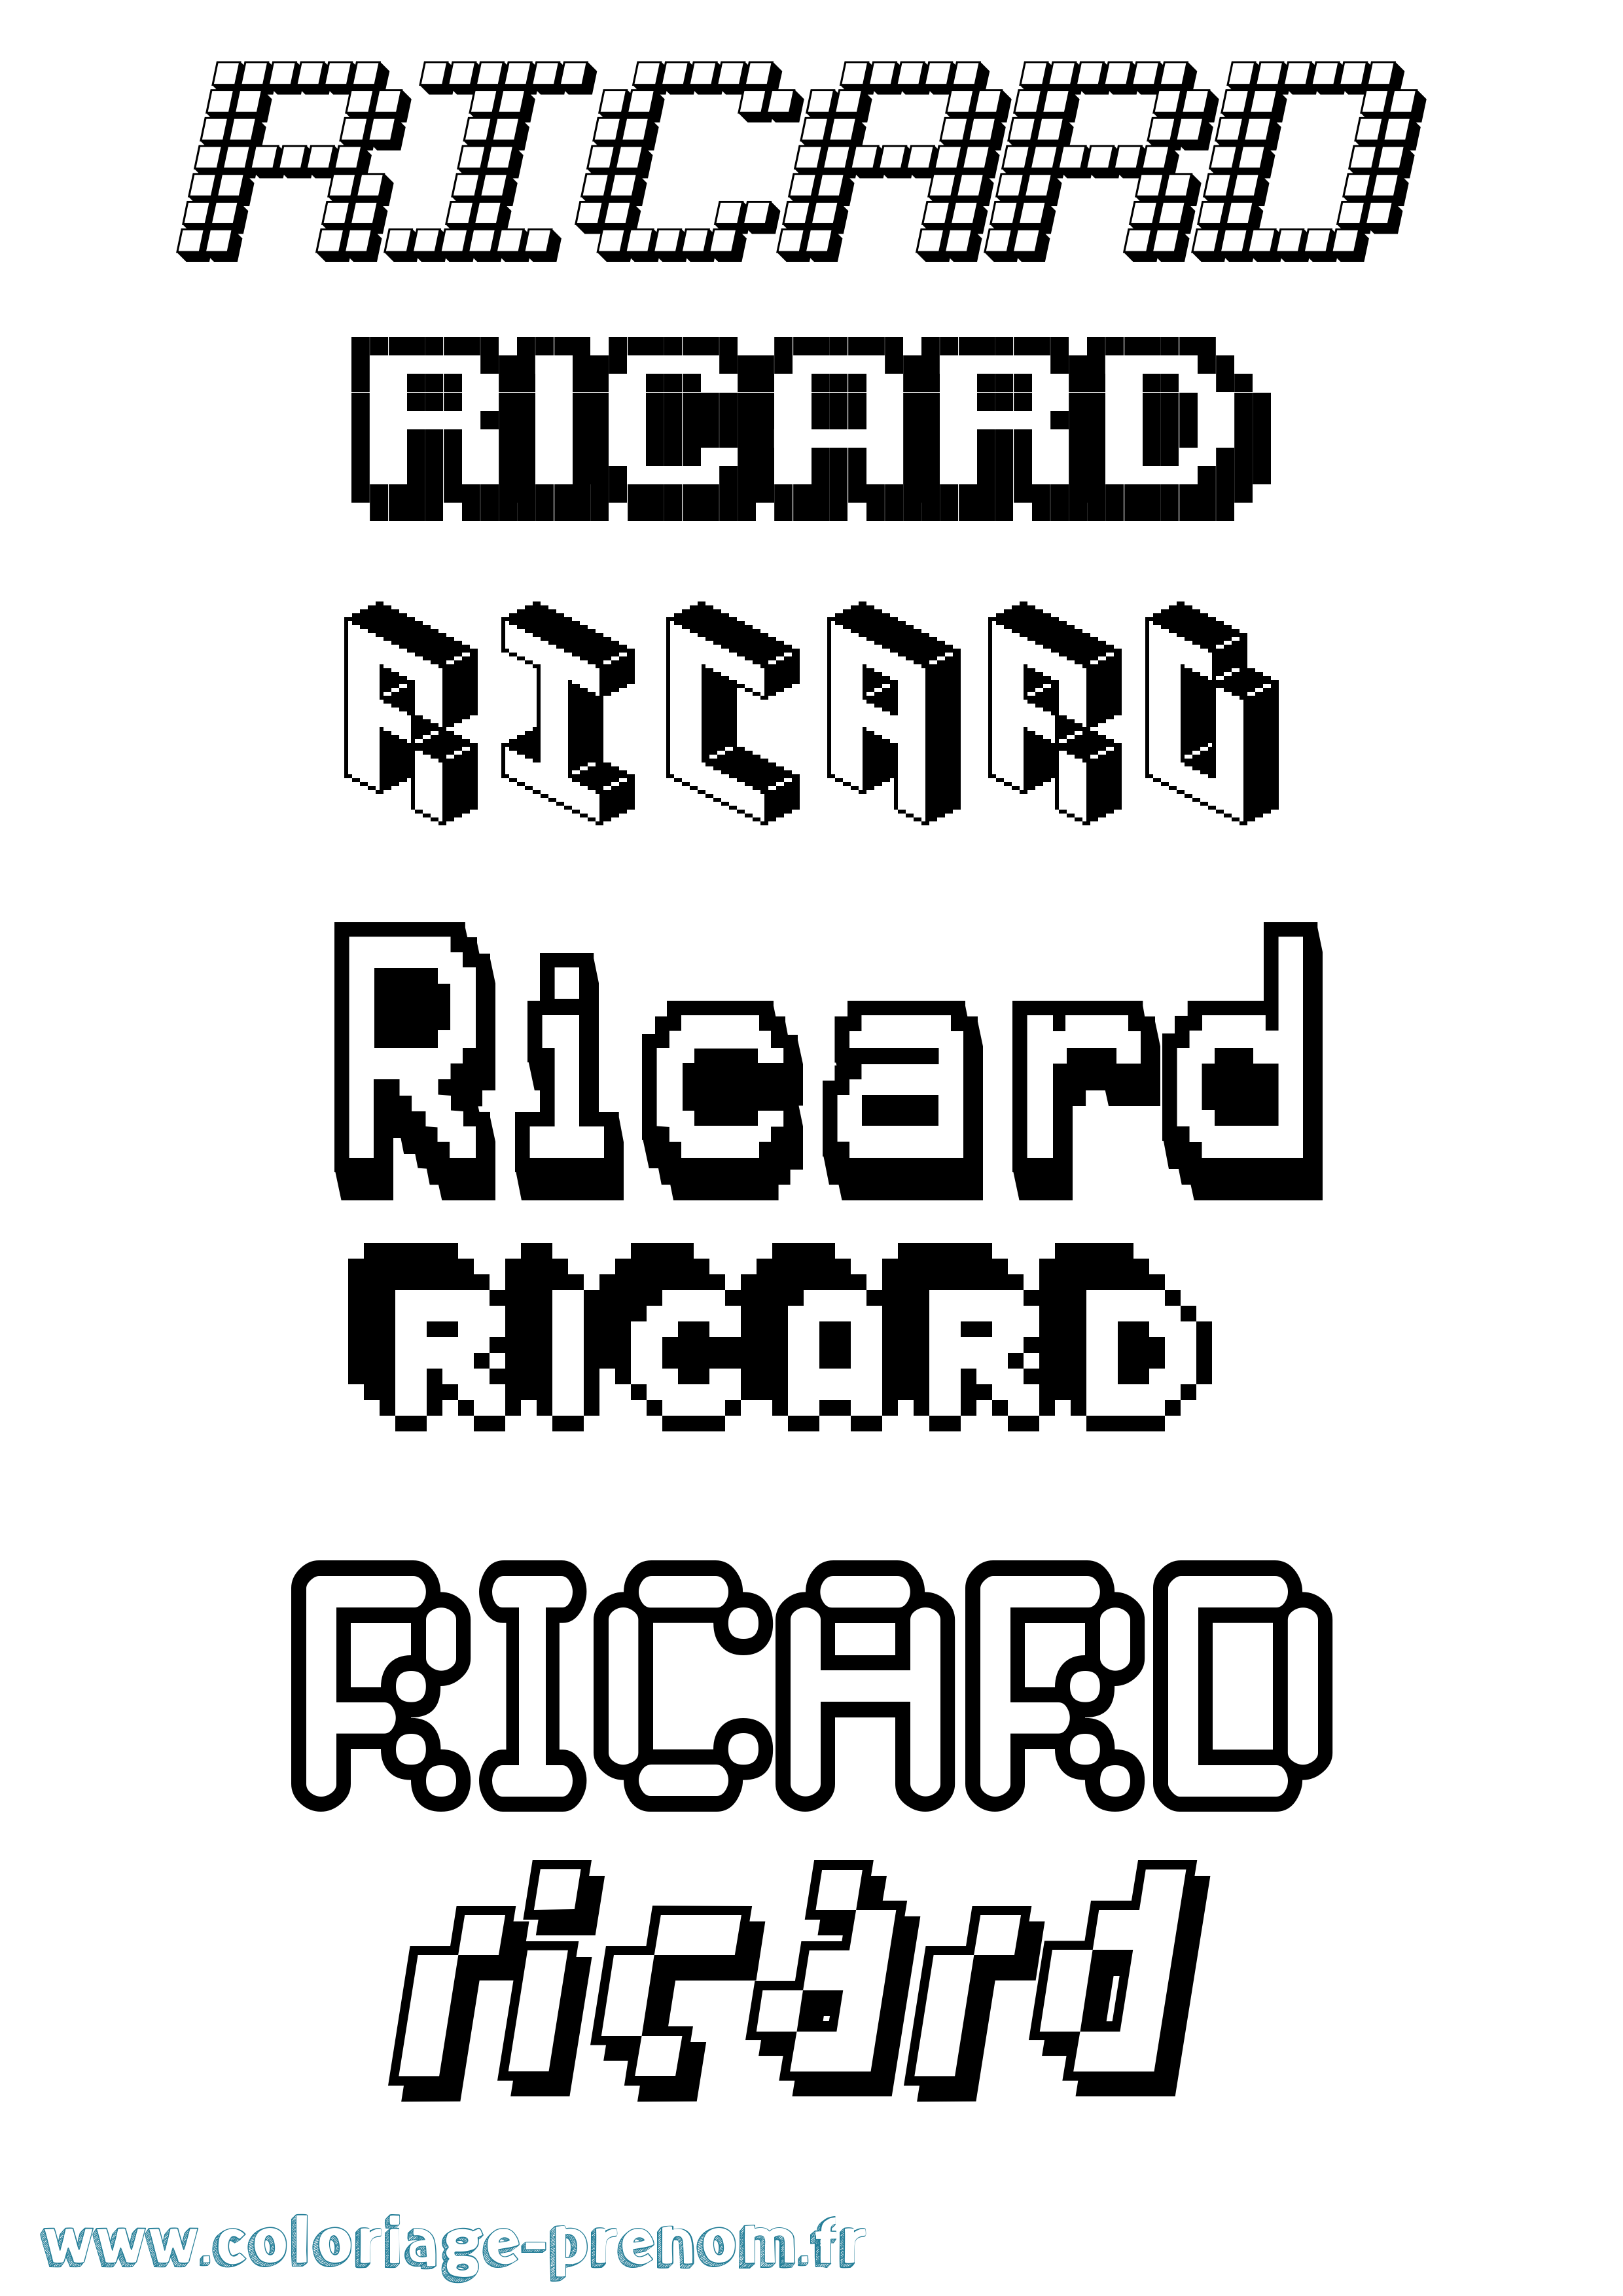 Coloriage prénom Ricard Pixel